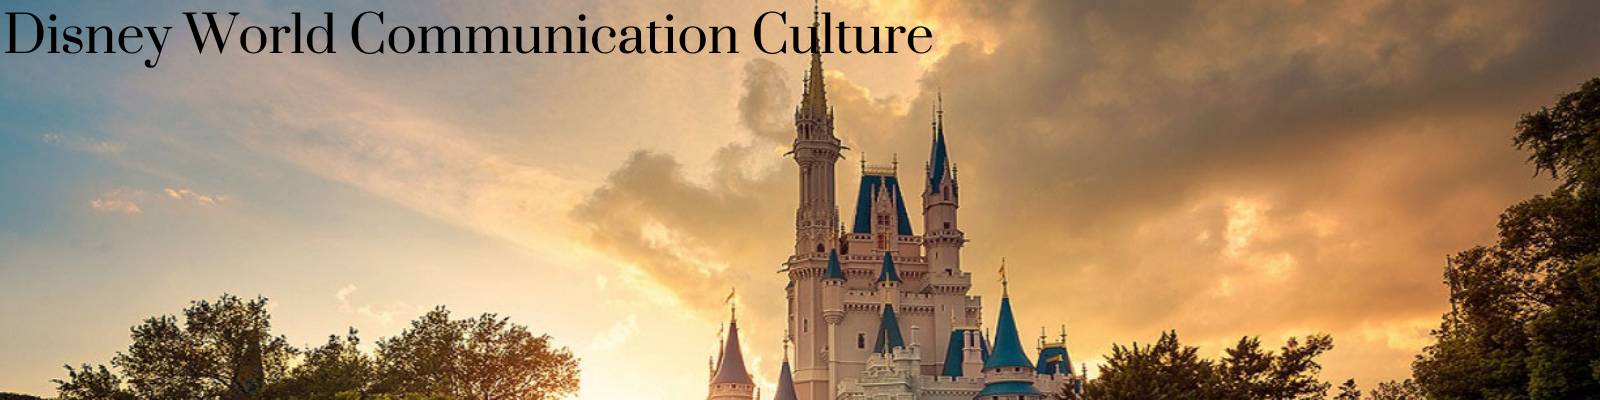 Disney World Communication Culture